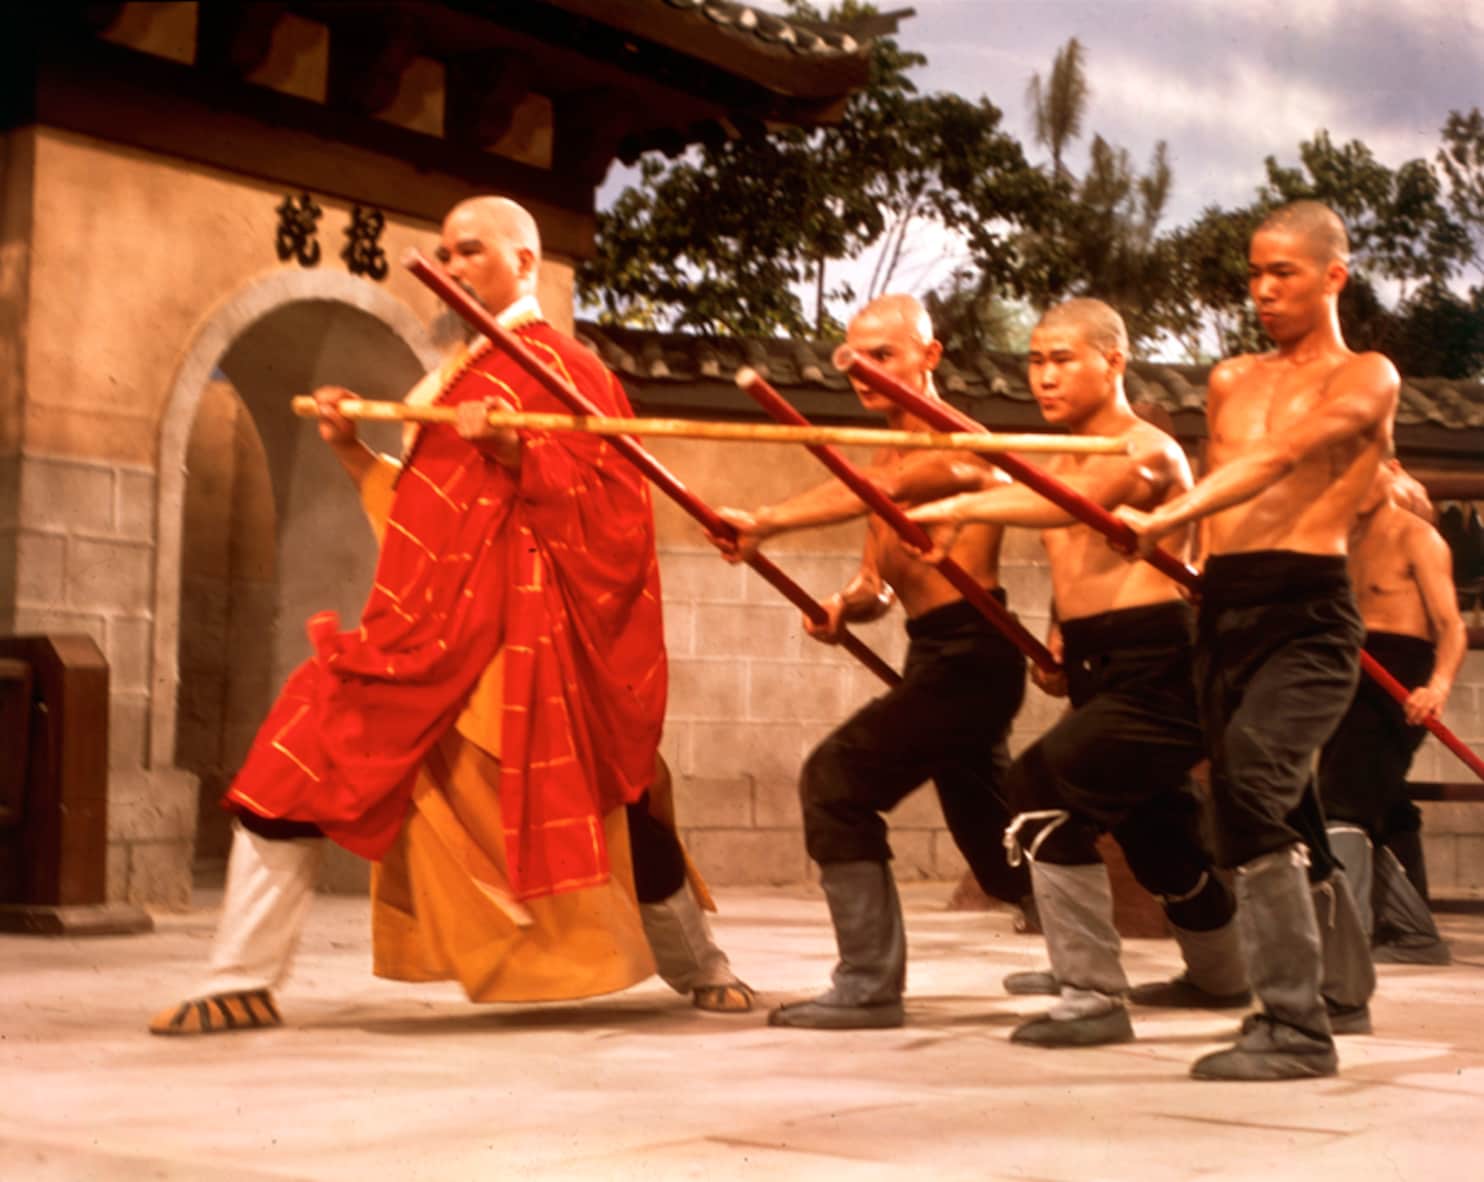 Popular Shaolin films blend martial arts, Buddhist spirituality - The